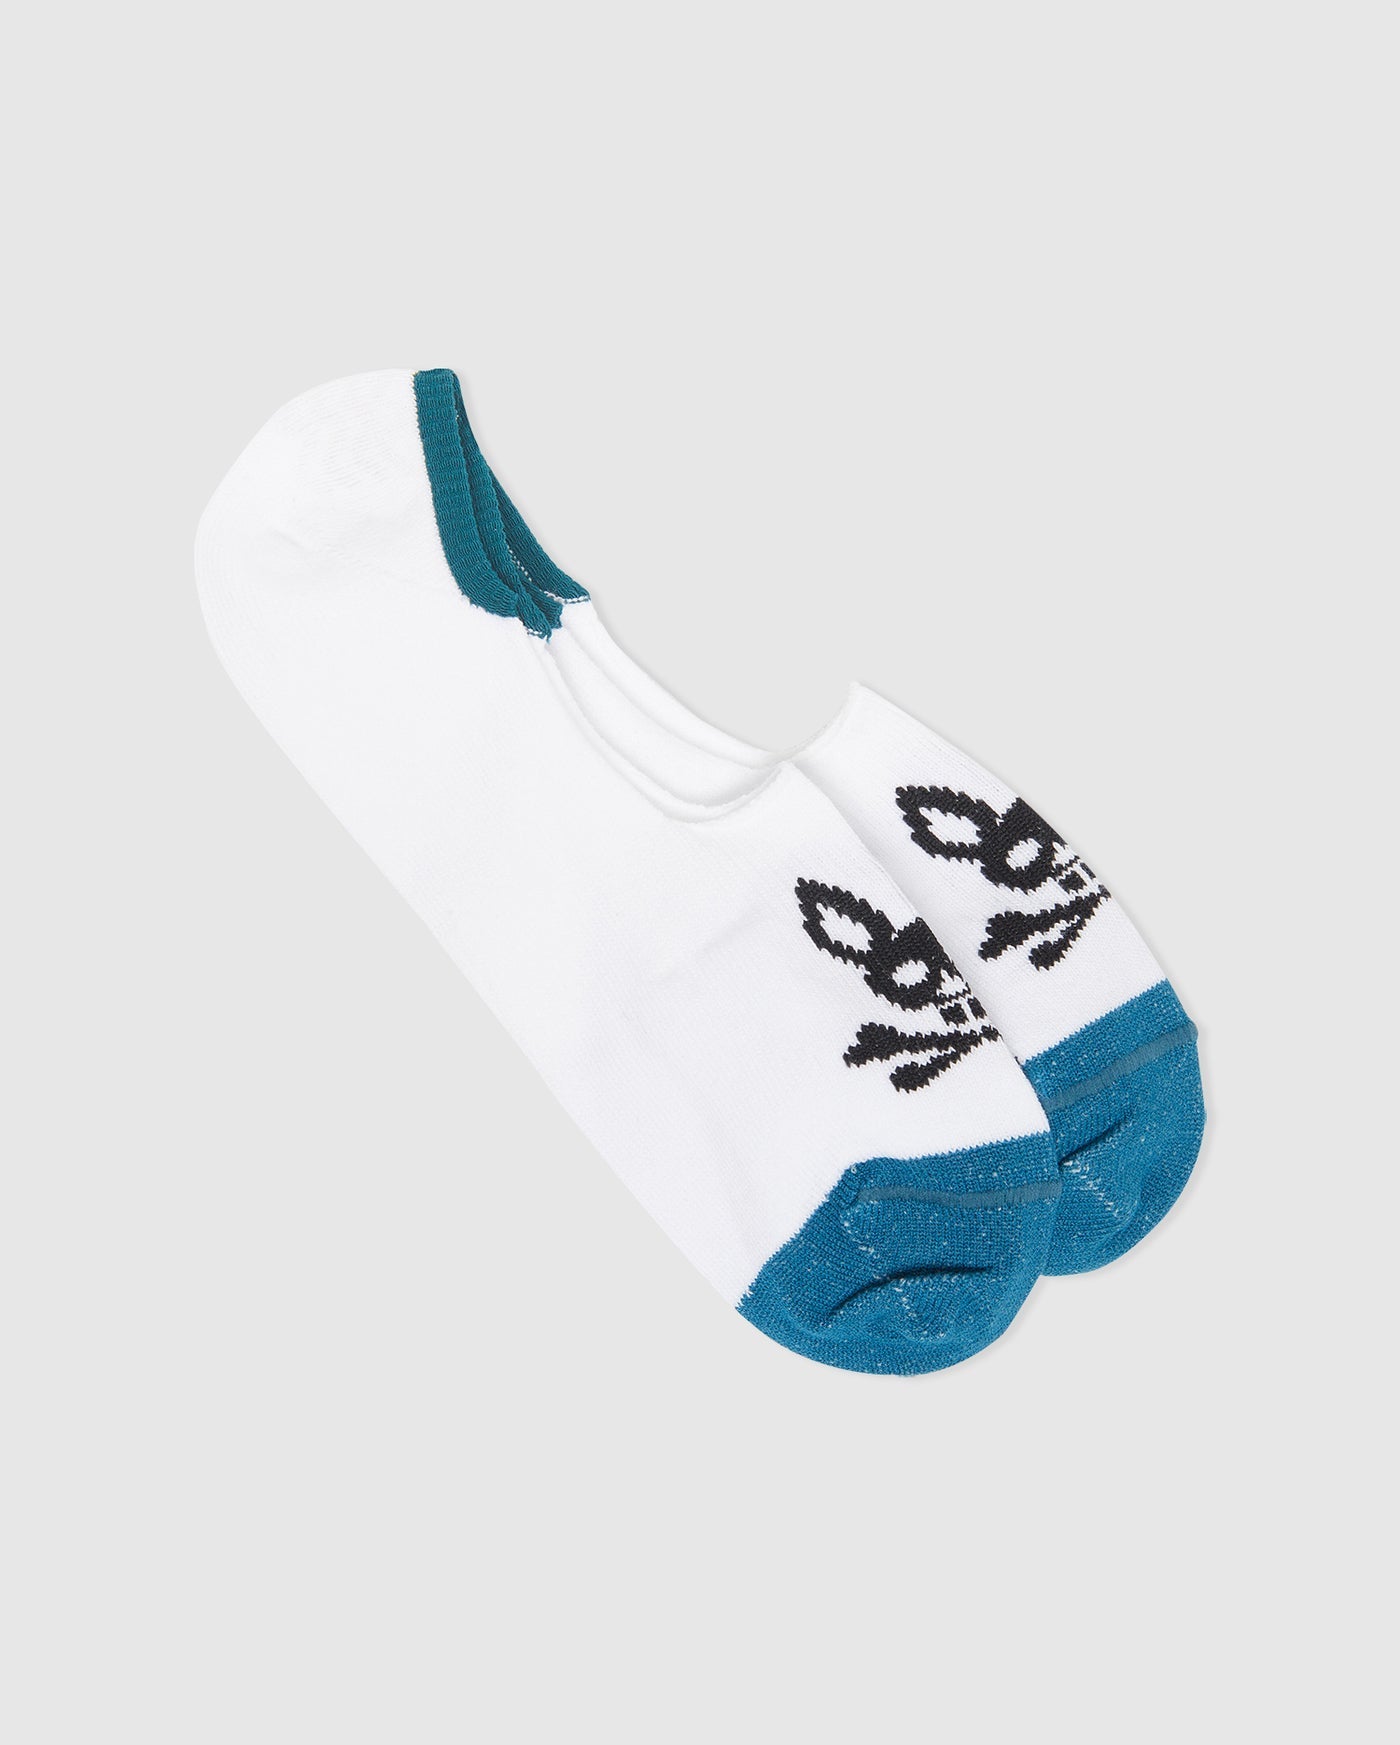 Psycho Bunny Sport Socks Seaport Blue